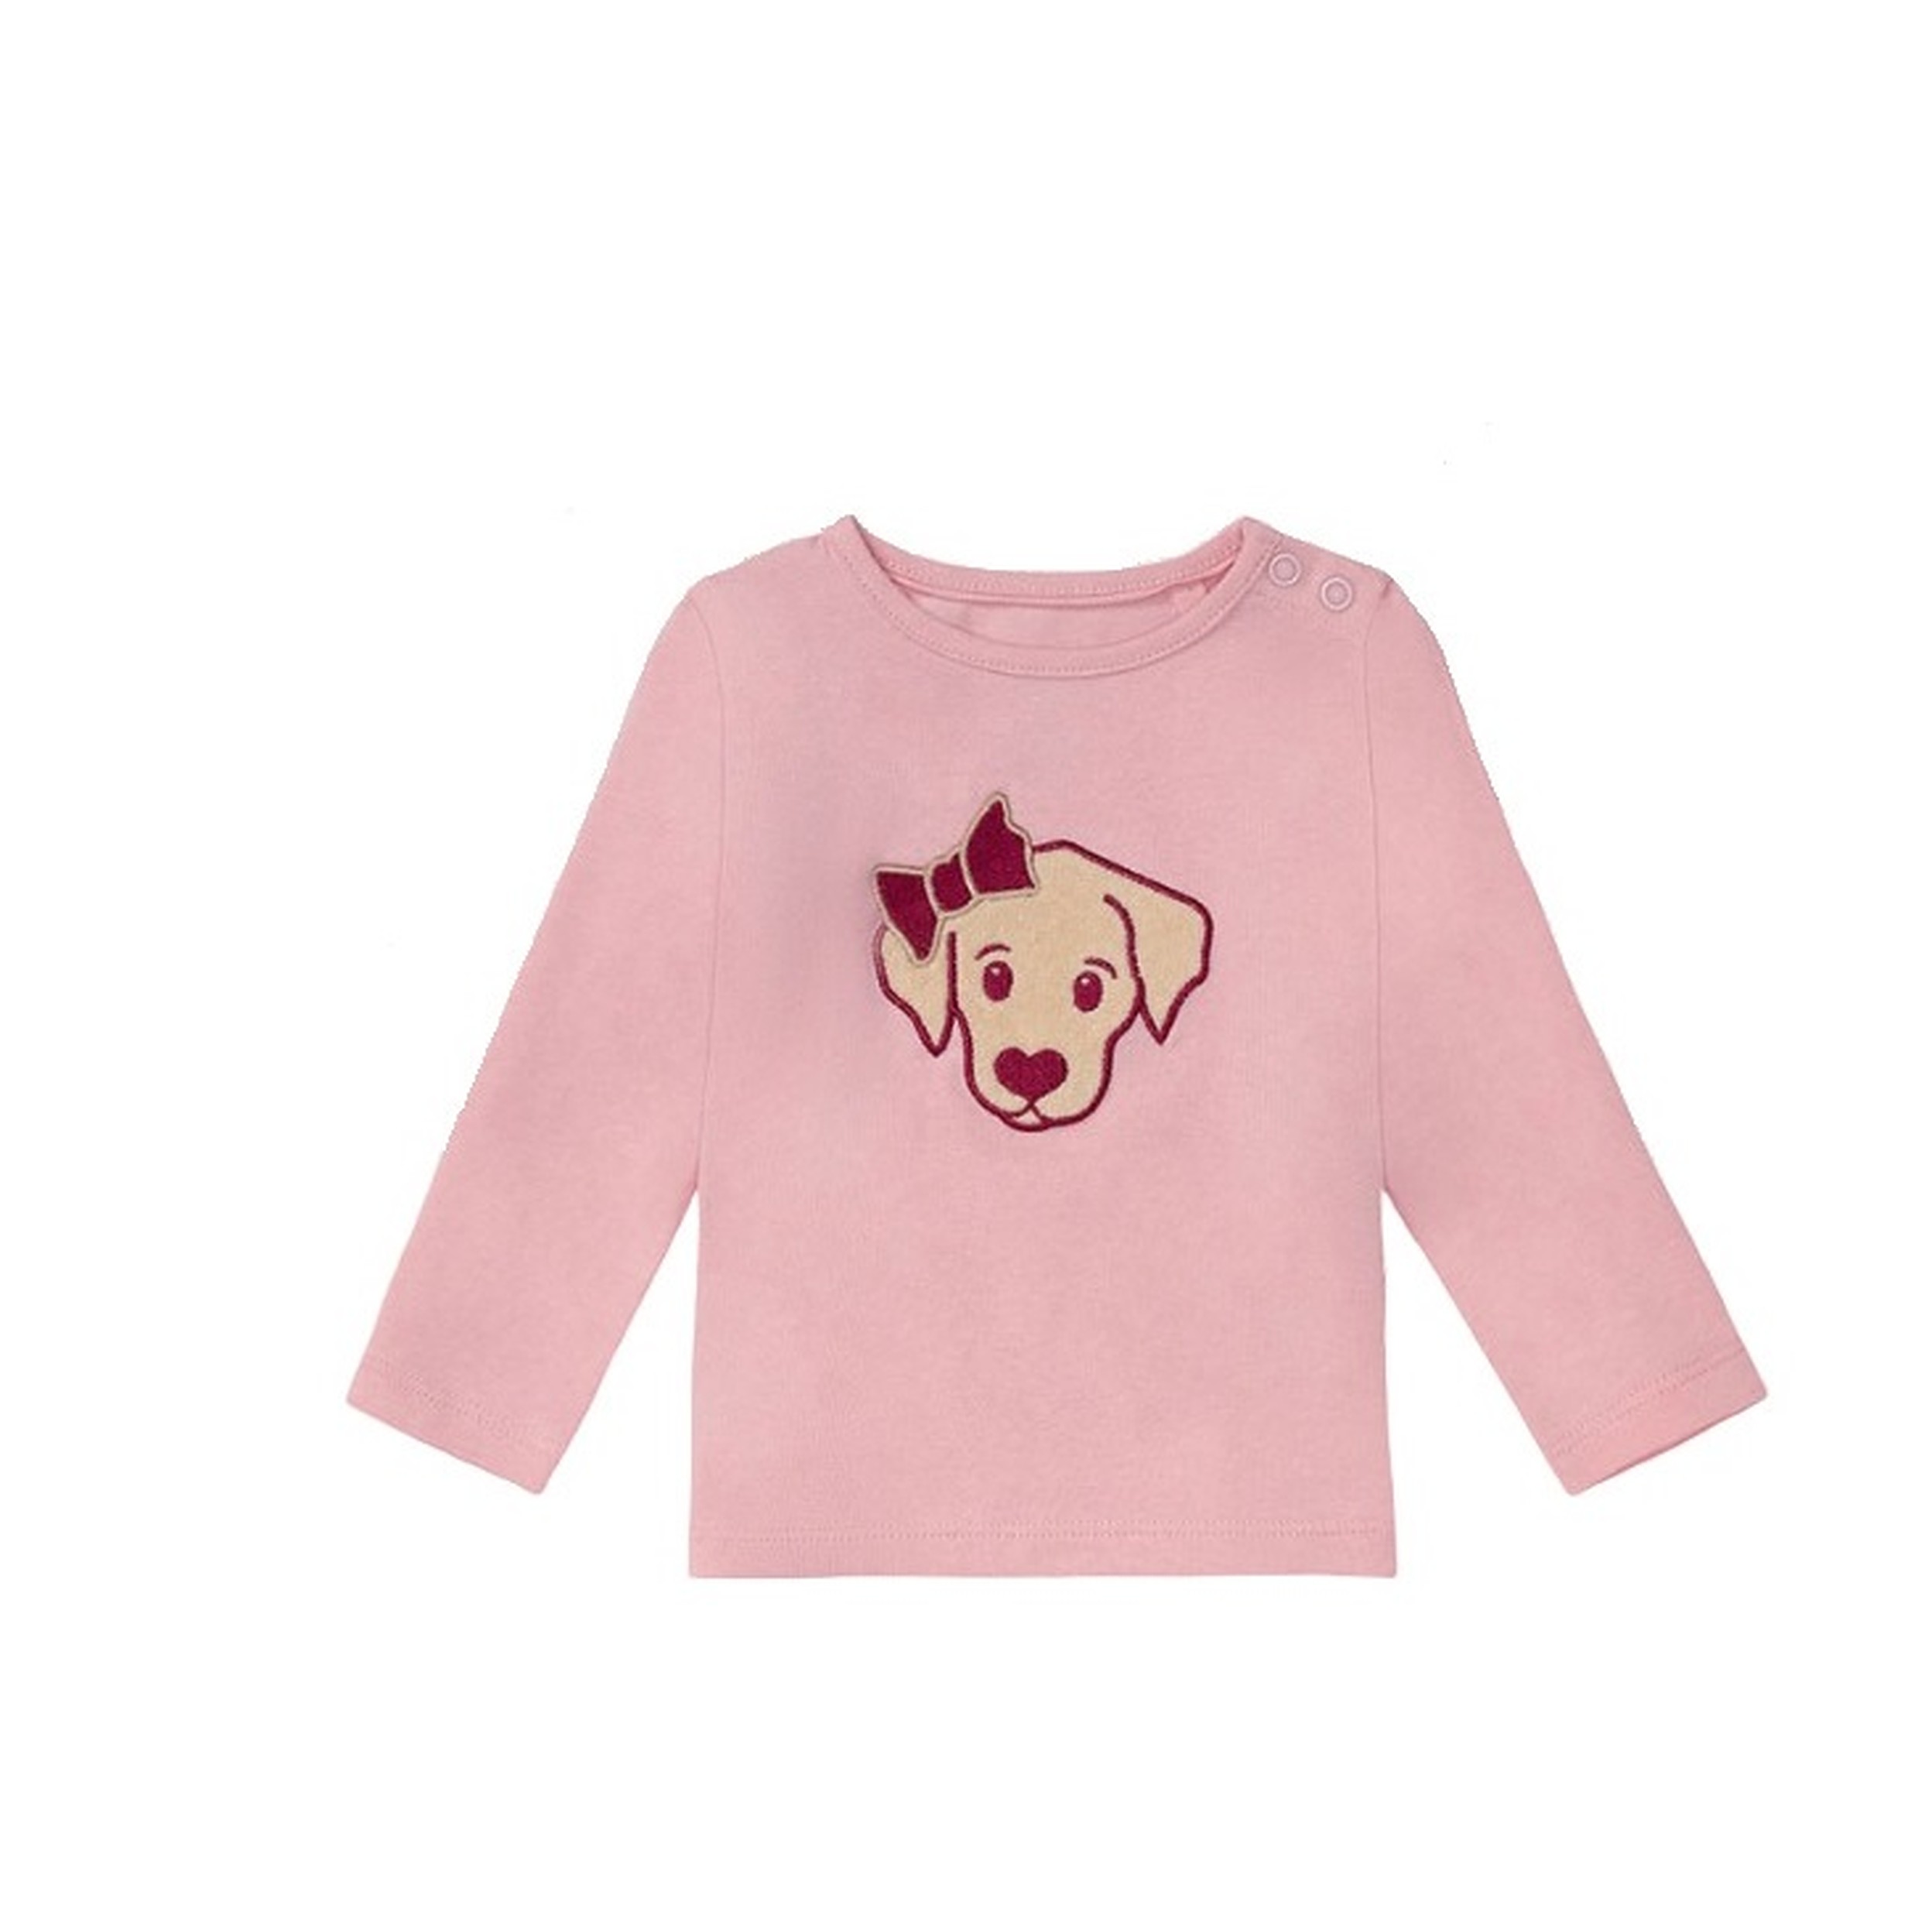 تی شرت آستین بلند نوزادی لوپیلو مدل سگ -  - 1